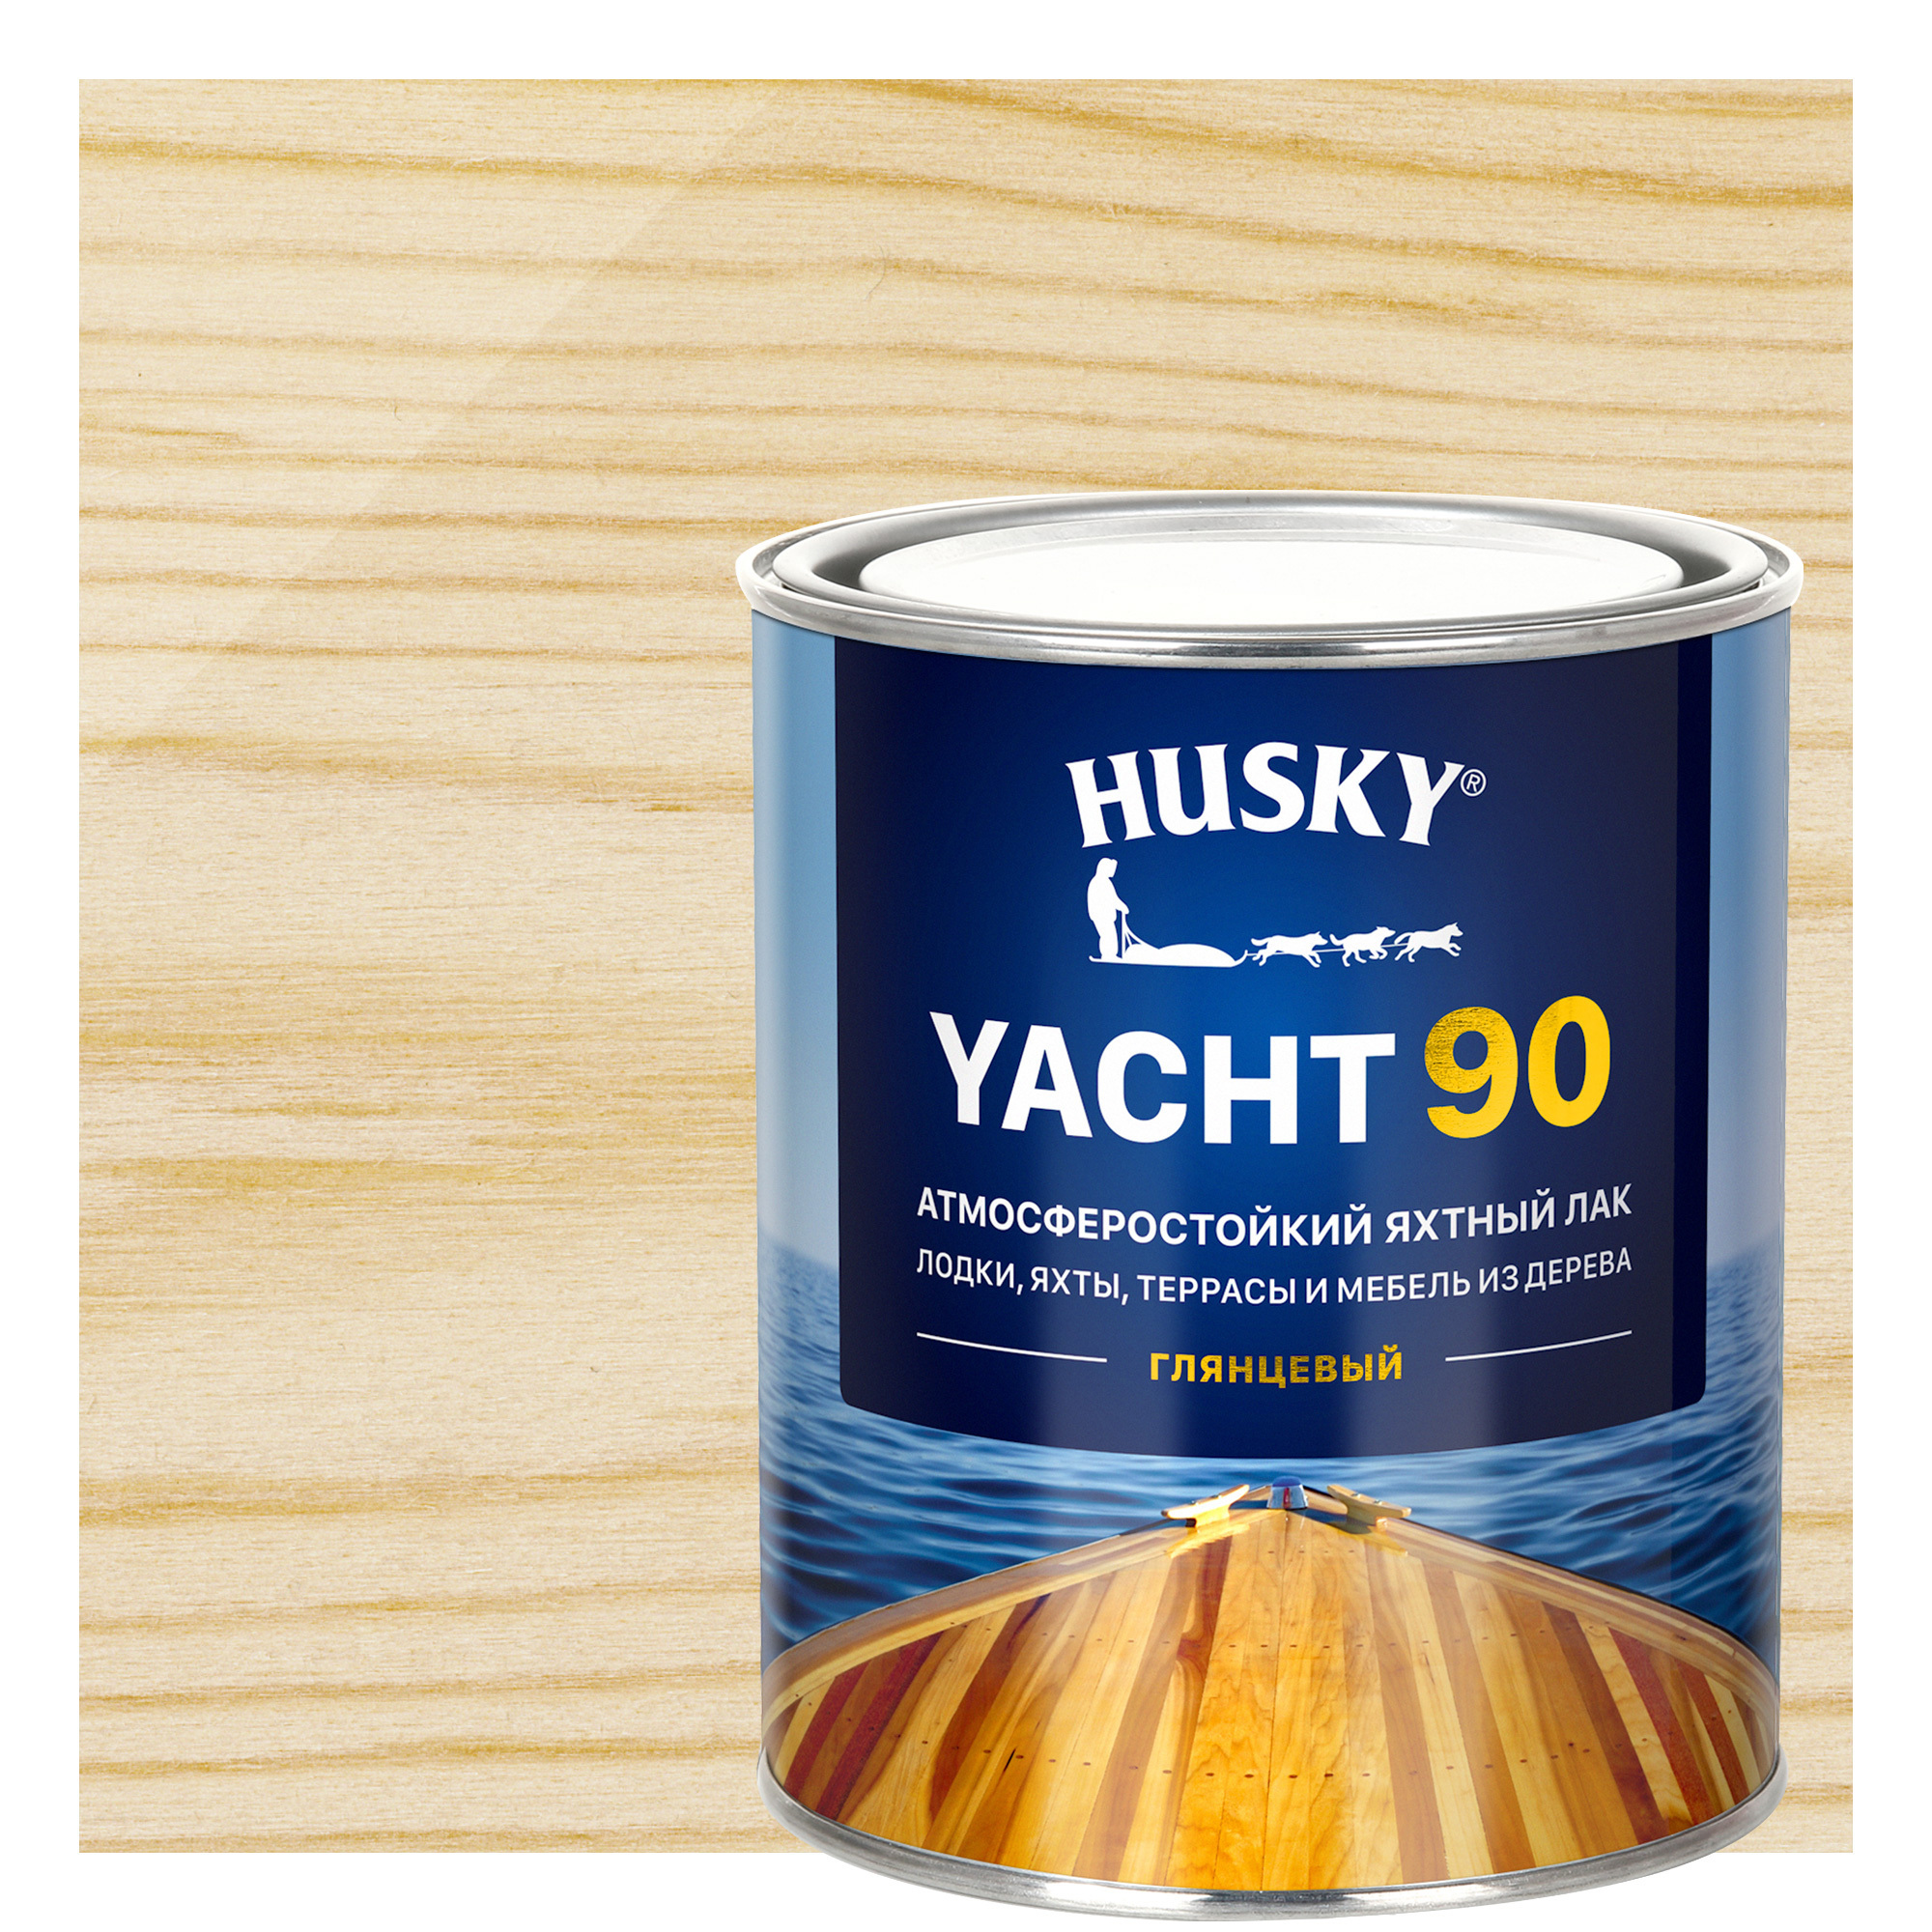 husky yacht 90